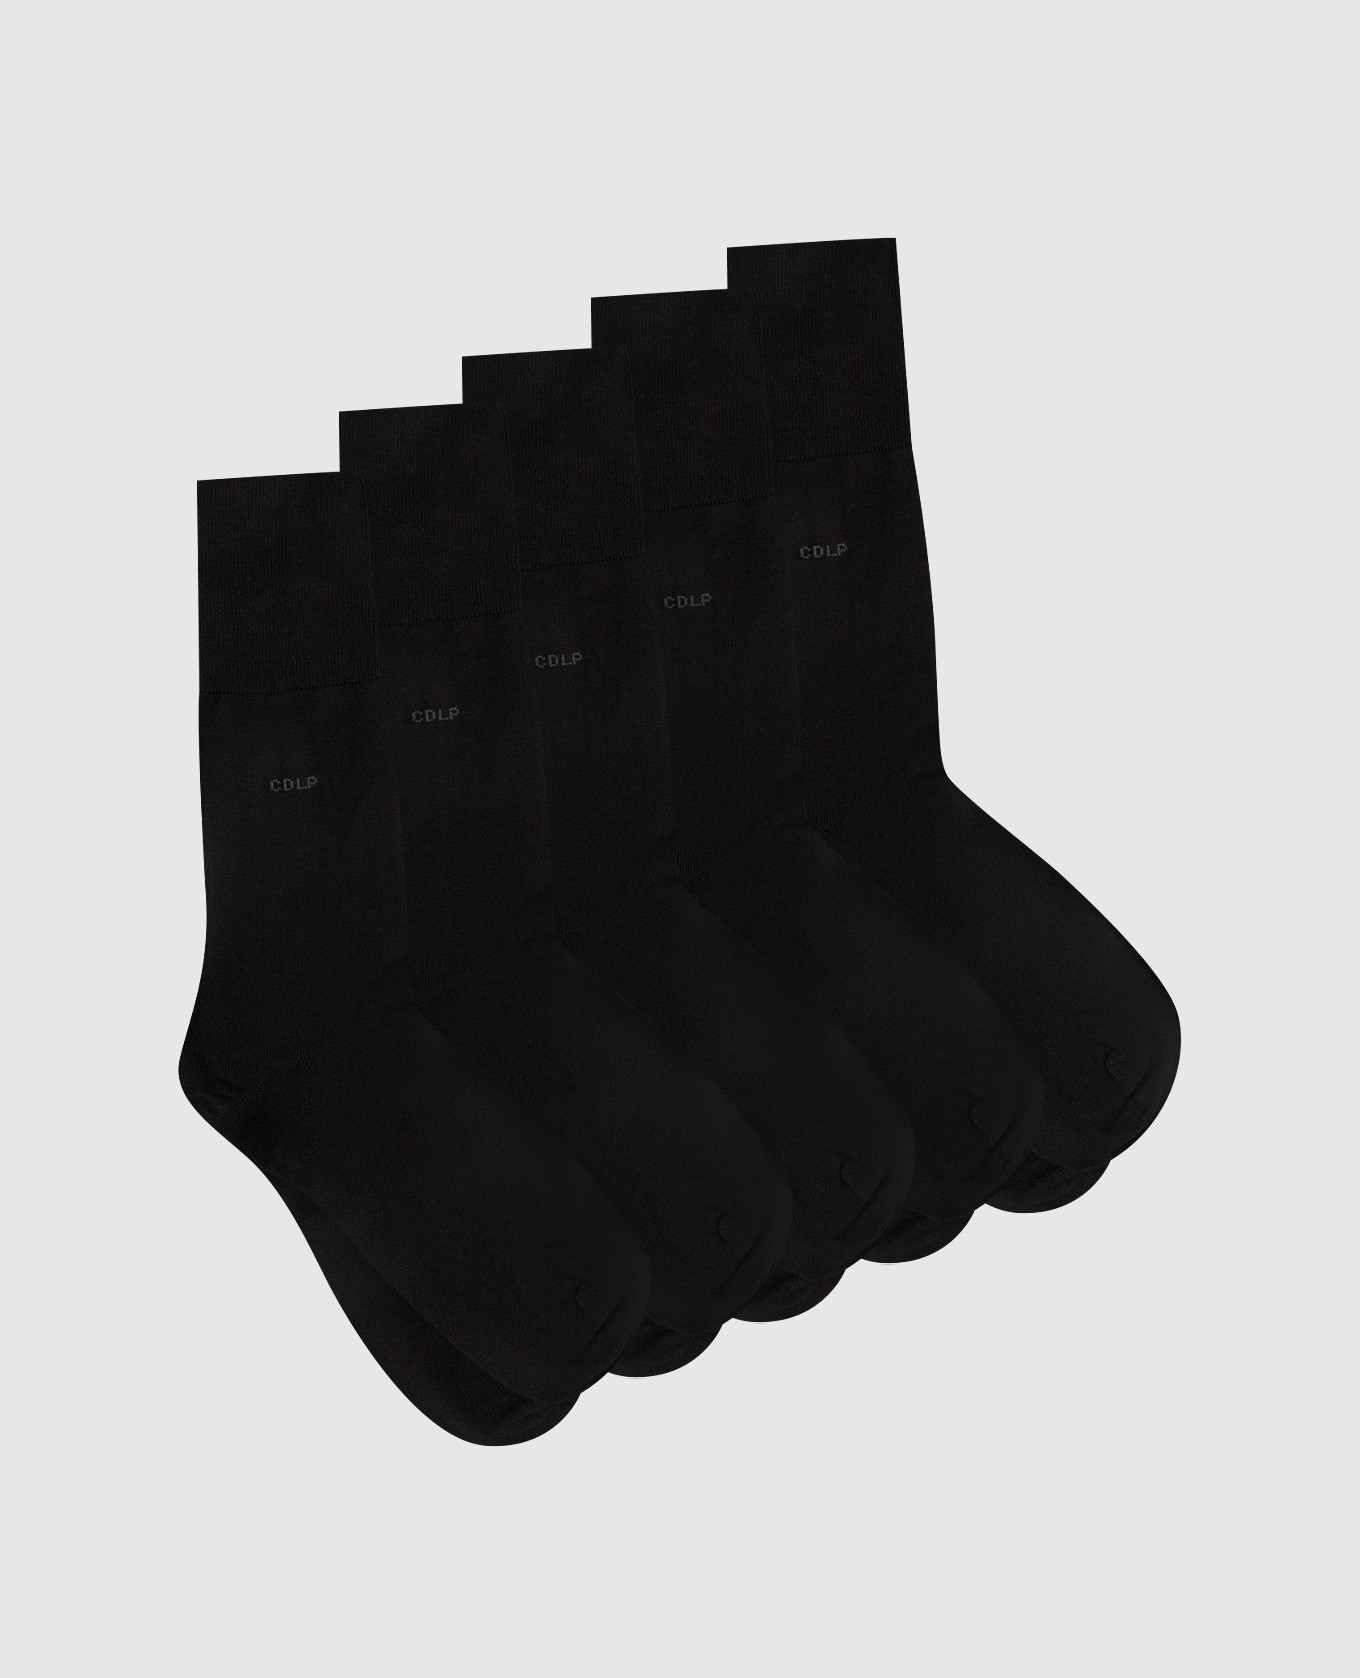 Set of black socks with logo